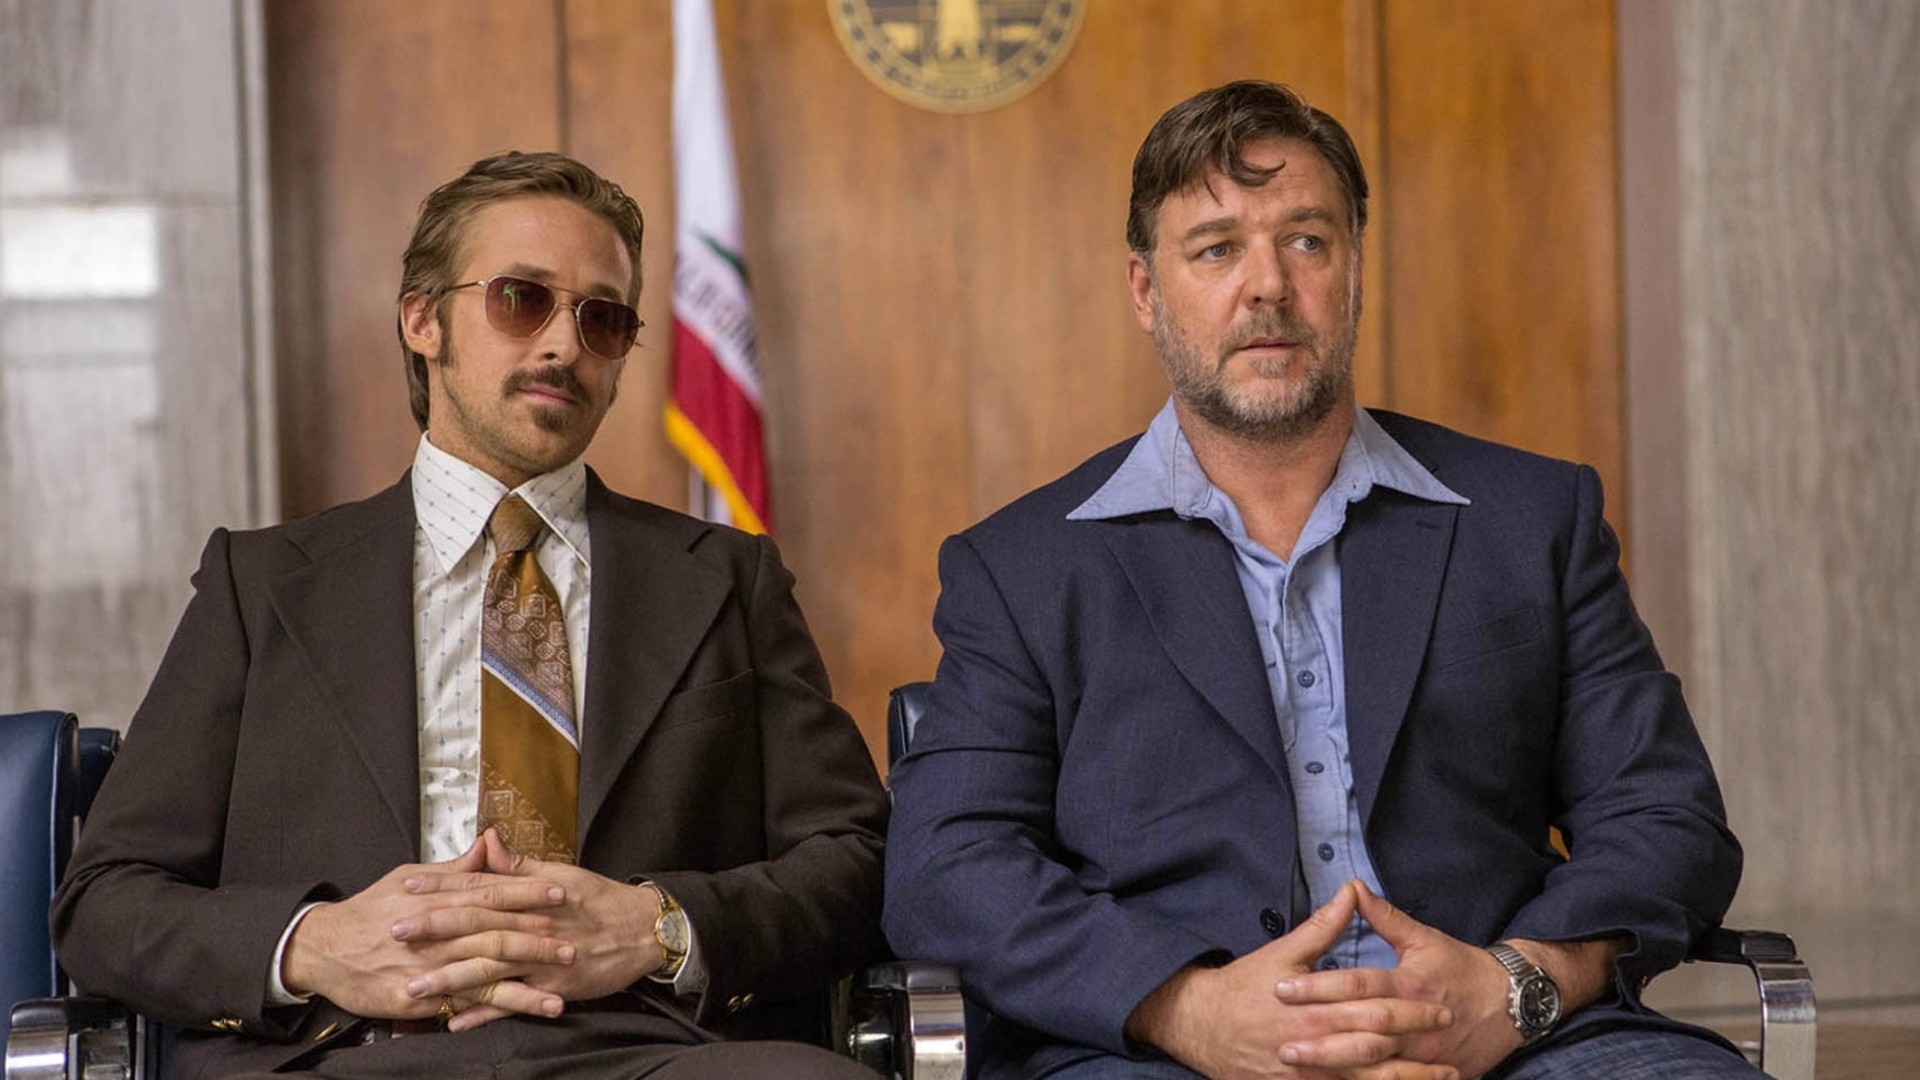 Immagine di The Nice Guys che ritrae Ryan Gosling e Russell Crowe